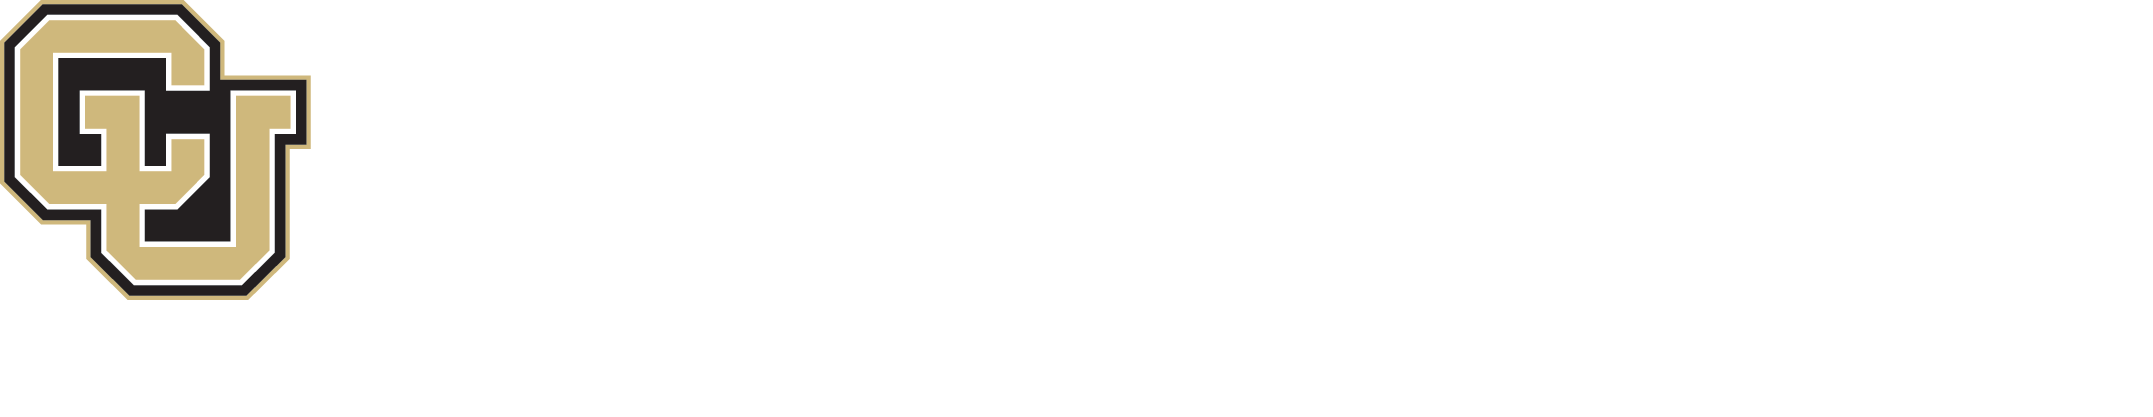 CUPharmacy  horizontal white letter logo